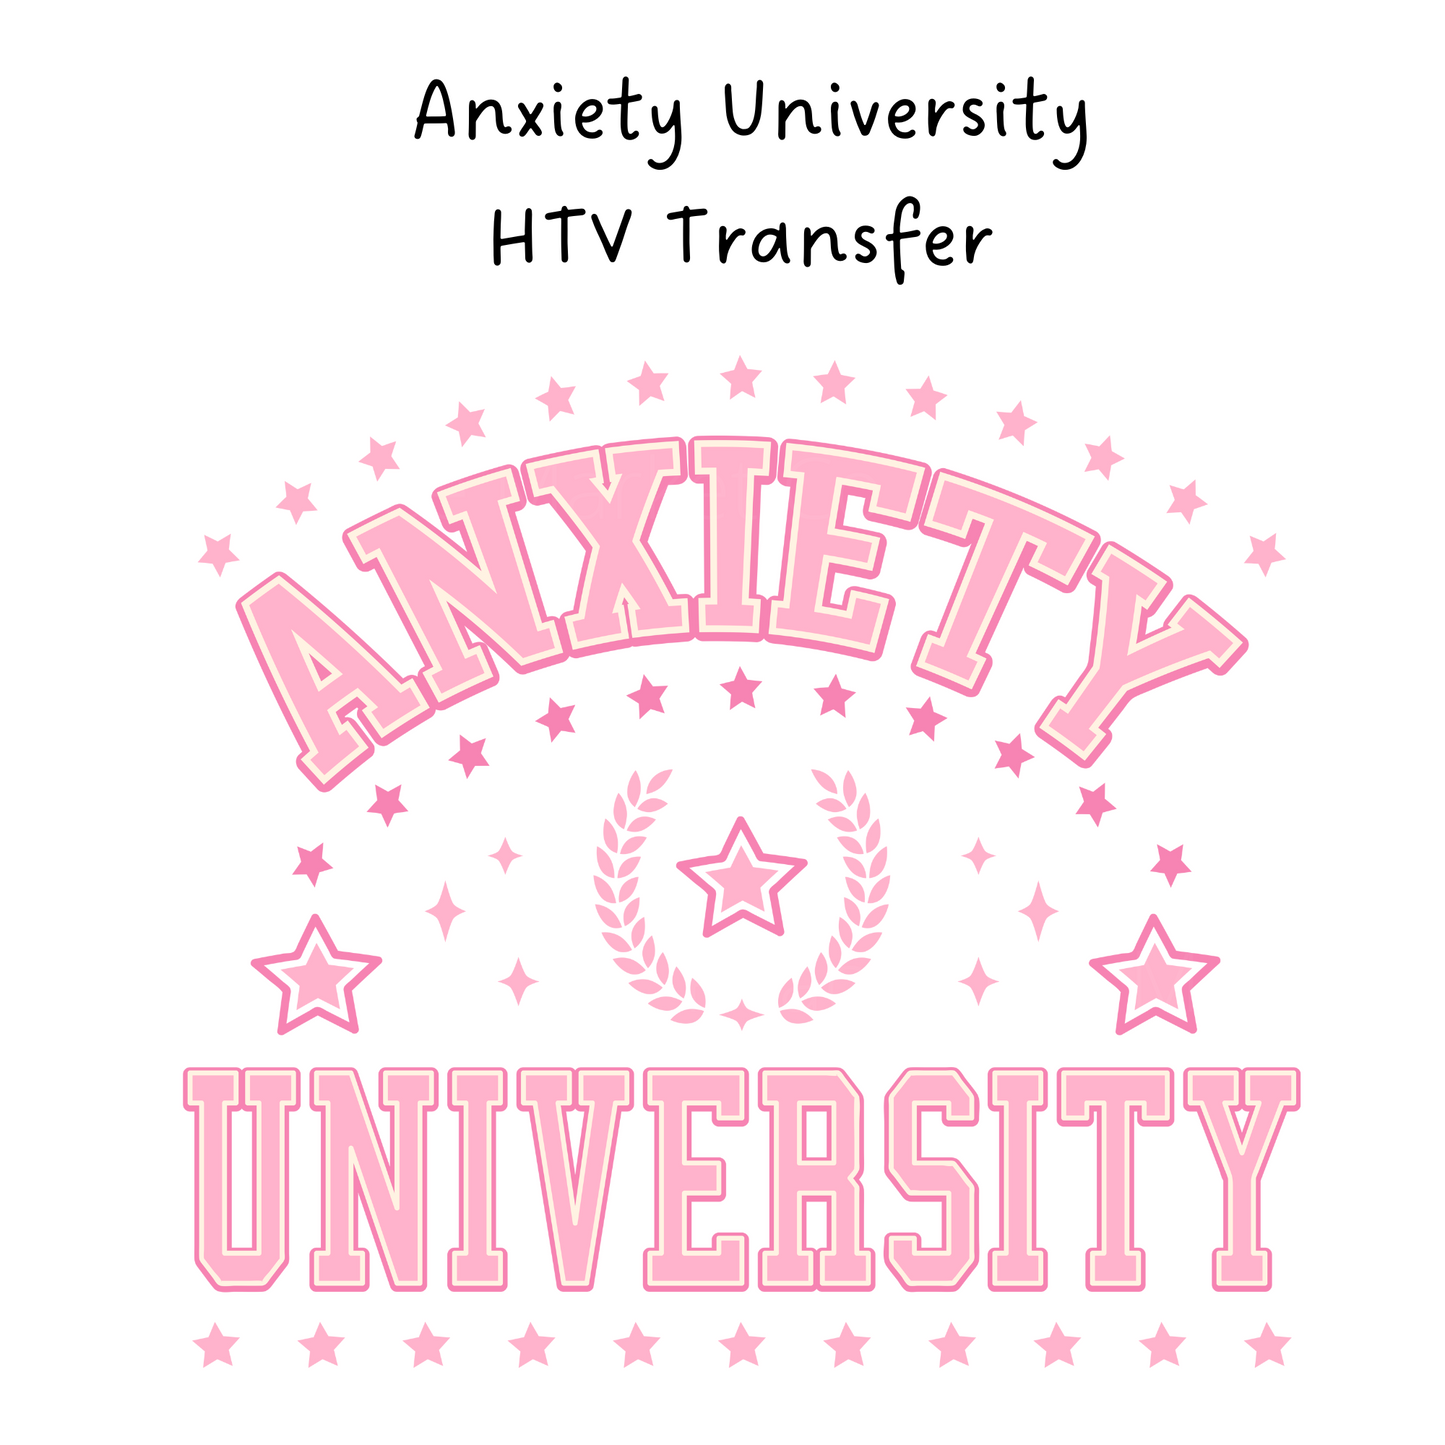 Anxiety University HTV Transfer